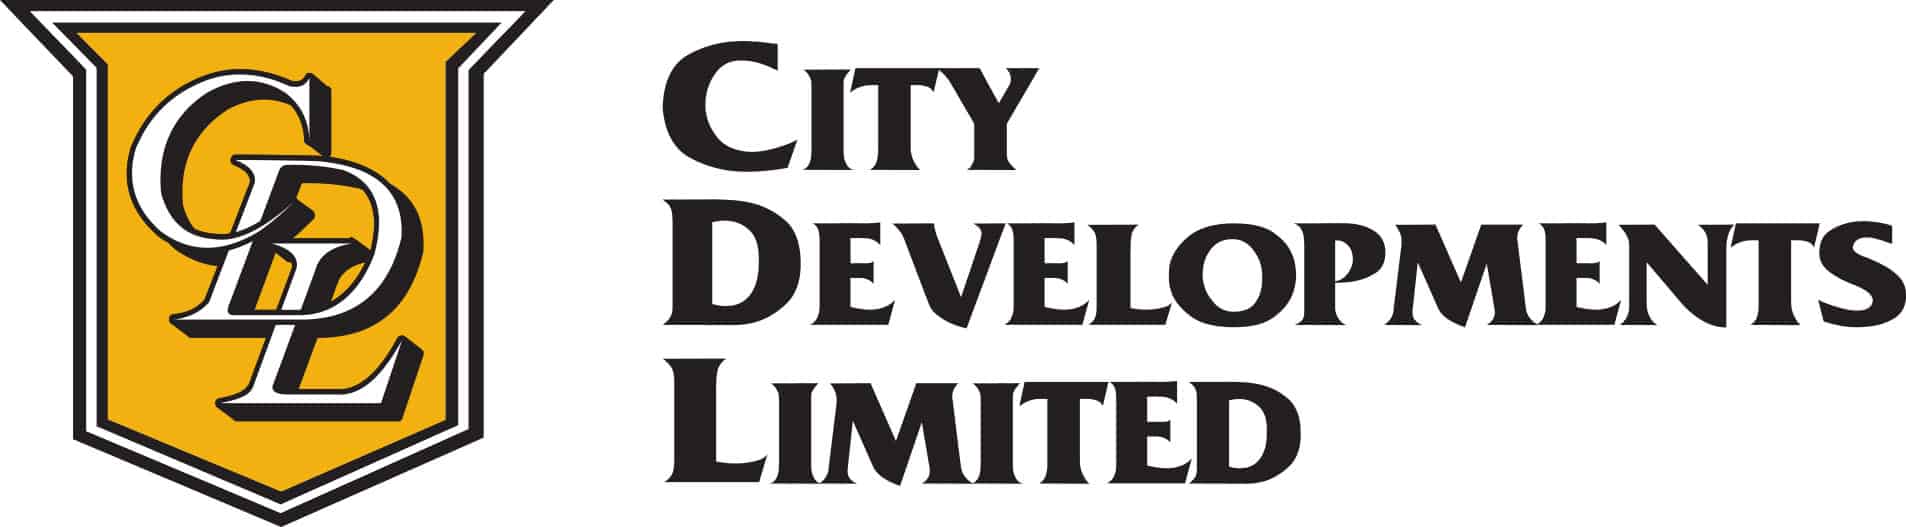 City Developments Limited (CDL)